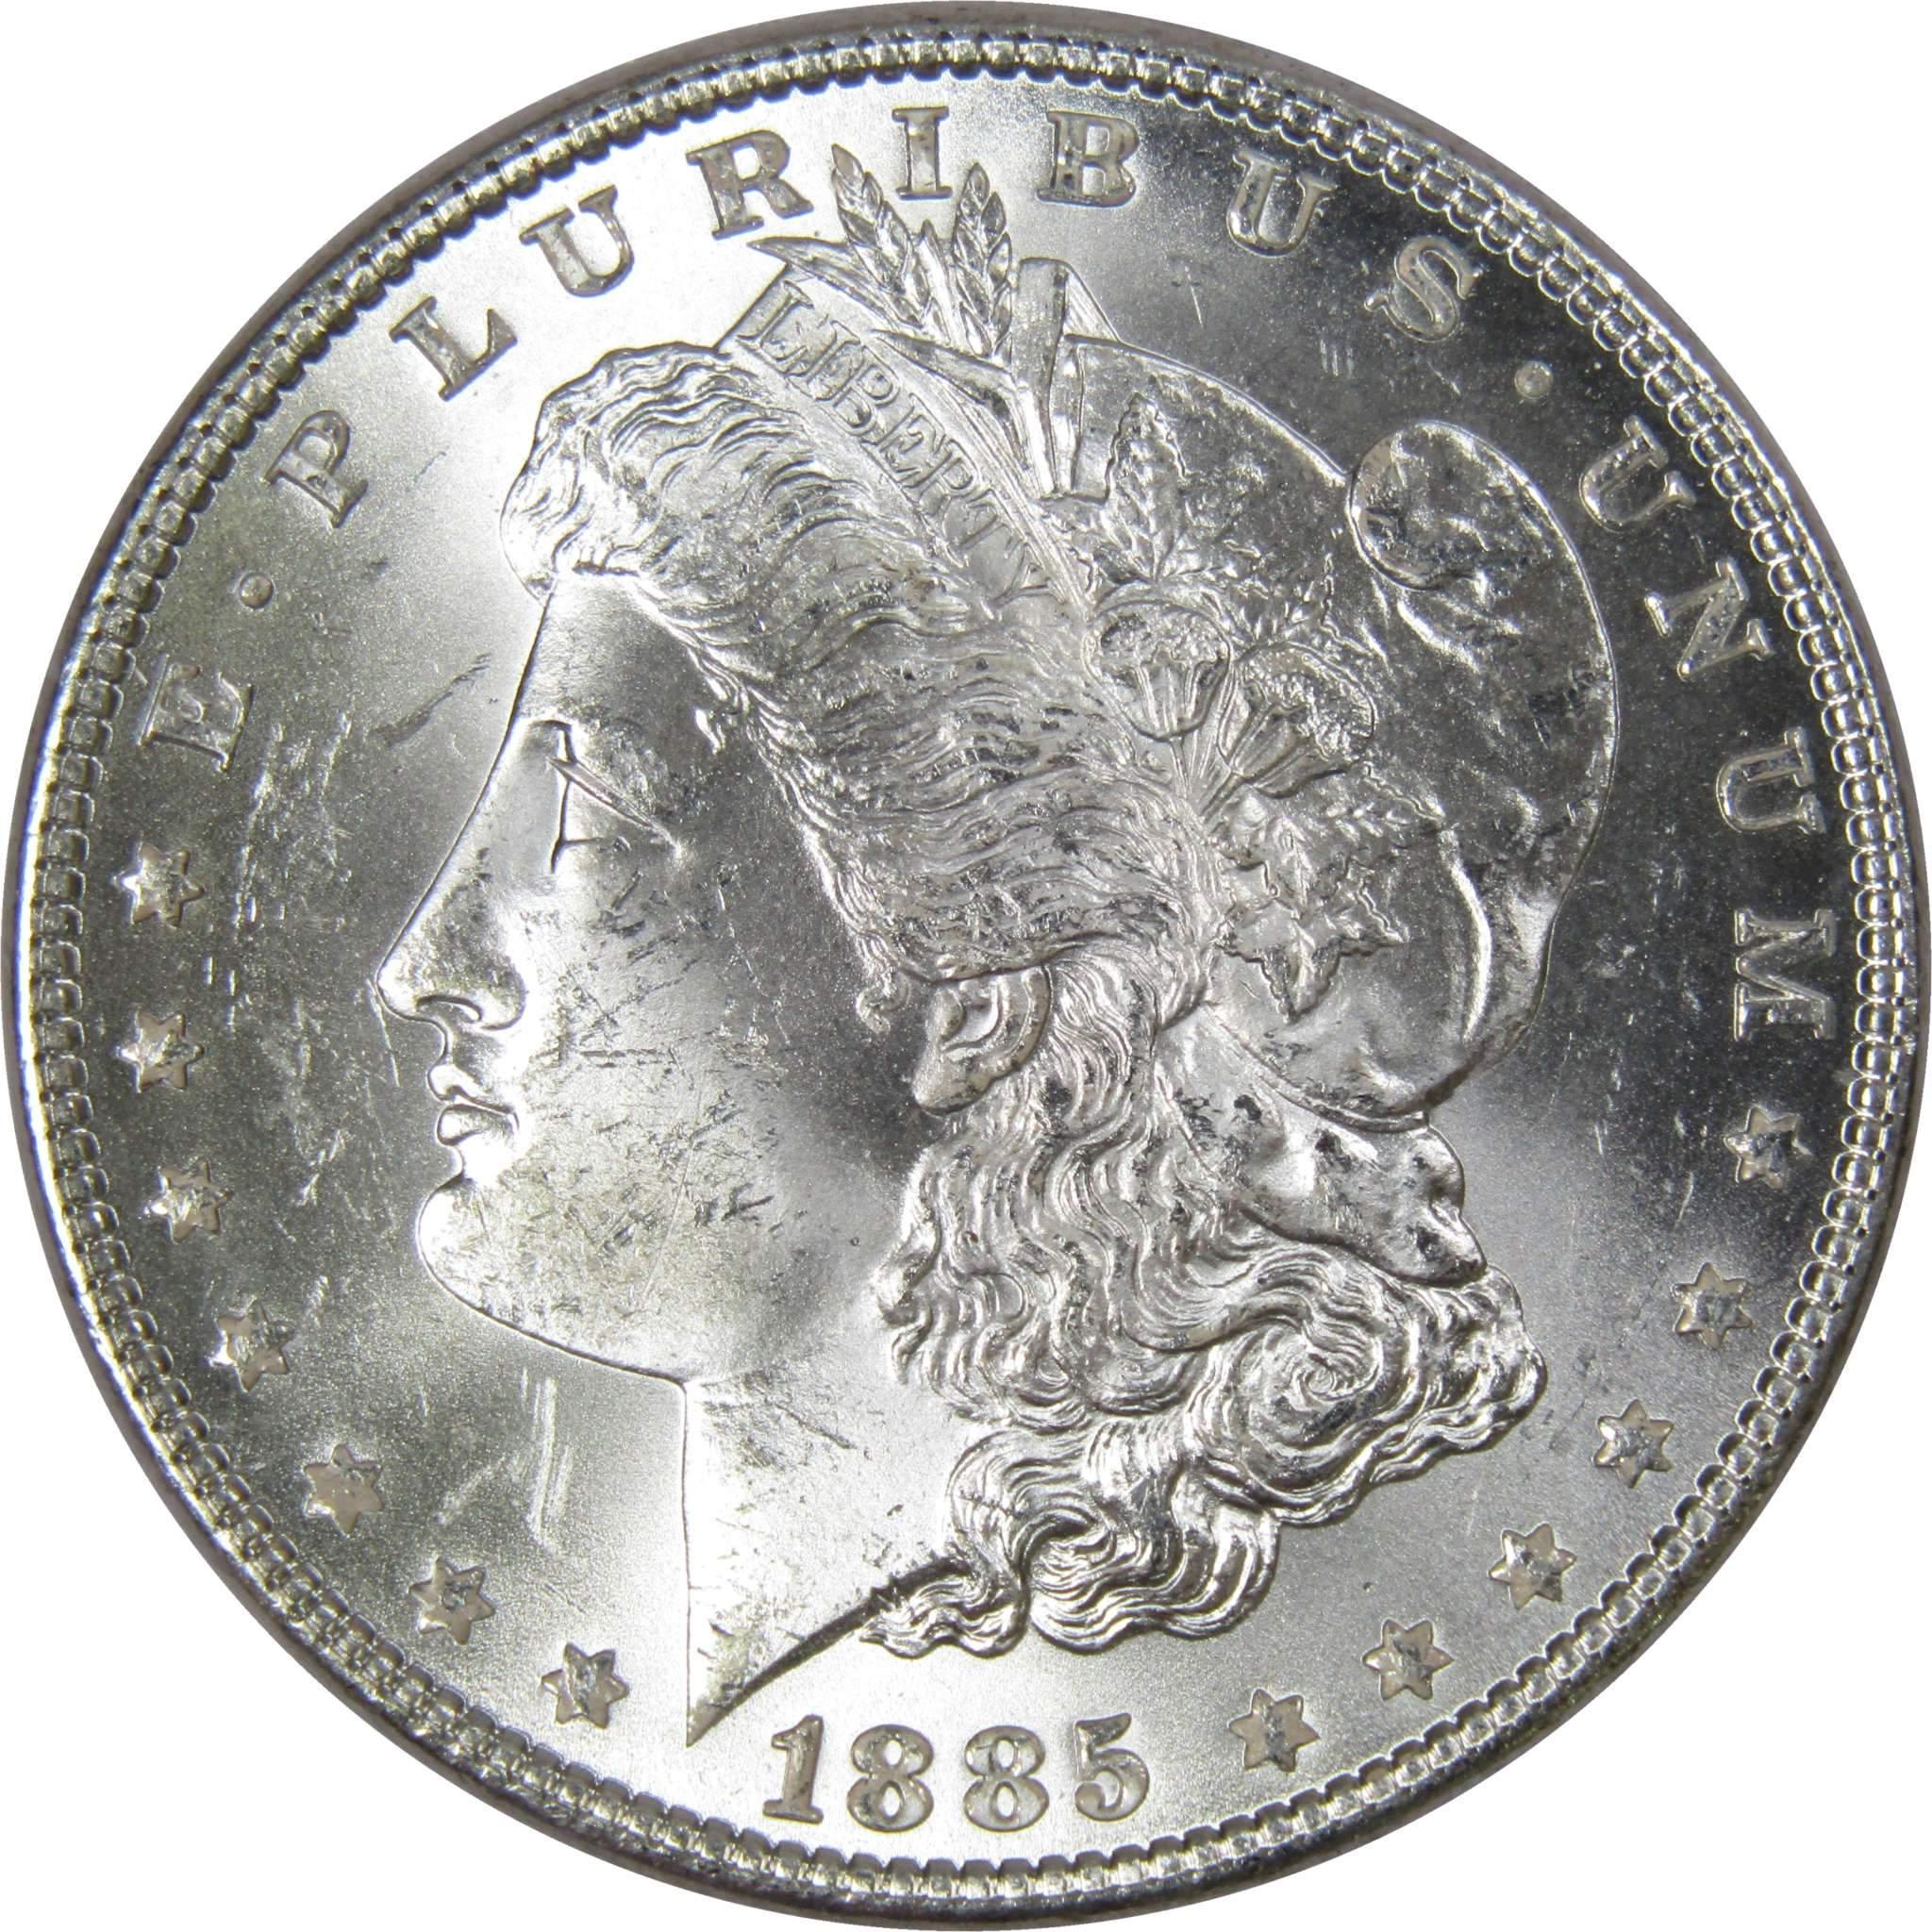 1885 Morgan Dollar BU Choice Uncirculated Mint State 90% Silver $1 US Coin - Morgan coin - Morgan silver dollar - Morgan silver dollar for sale - Profile Coins &amp; Collectibles